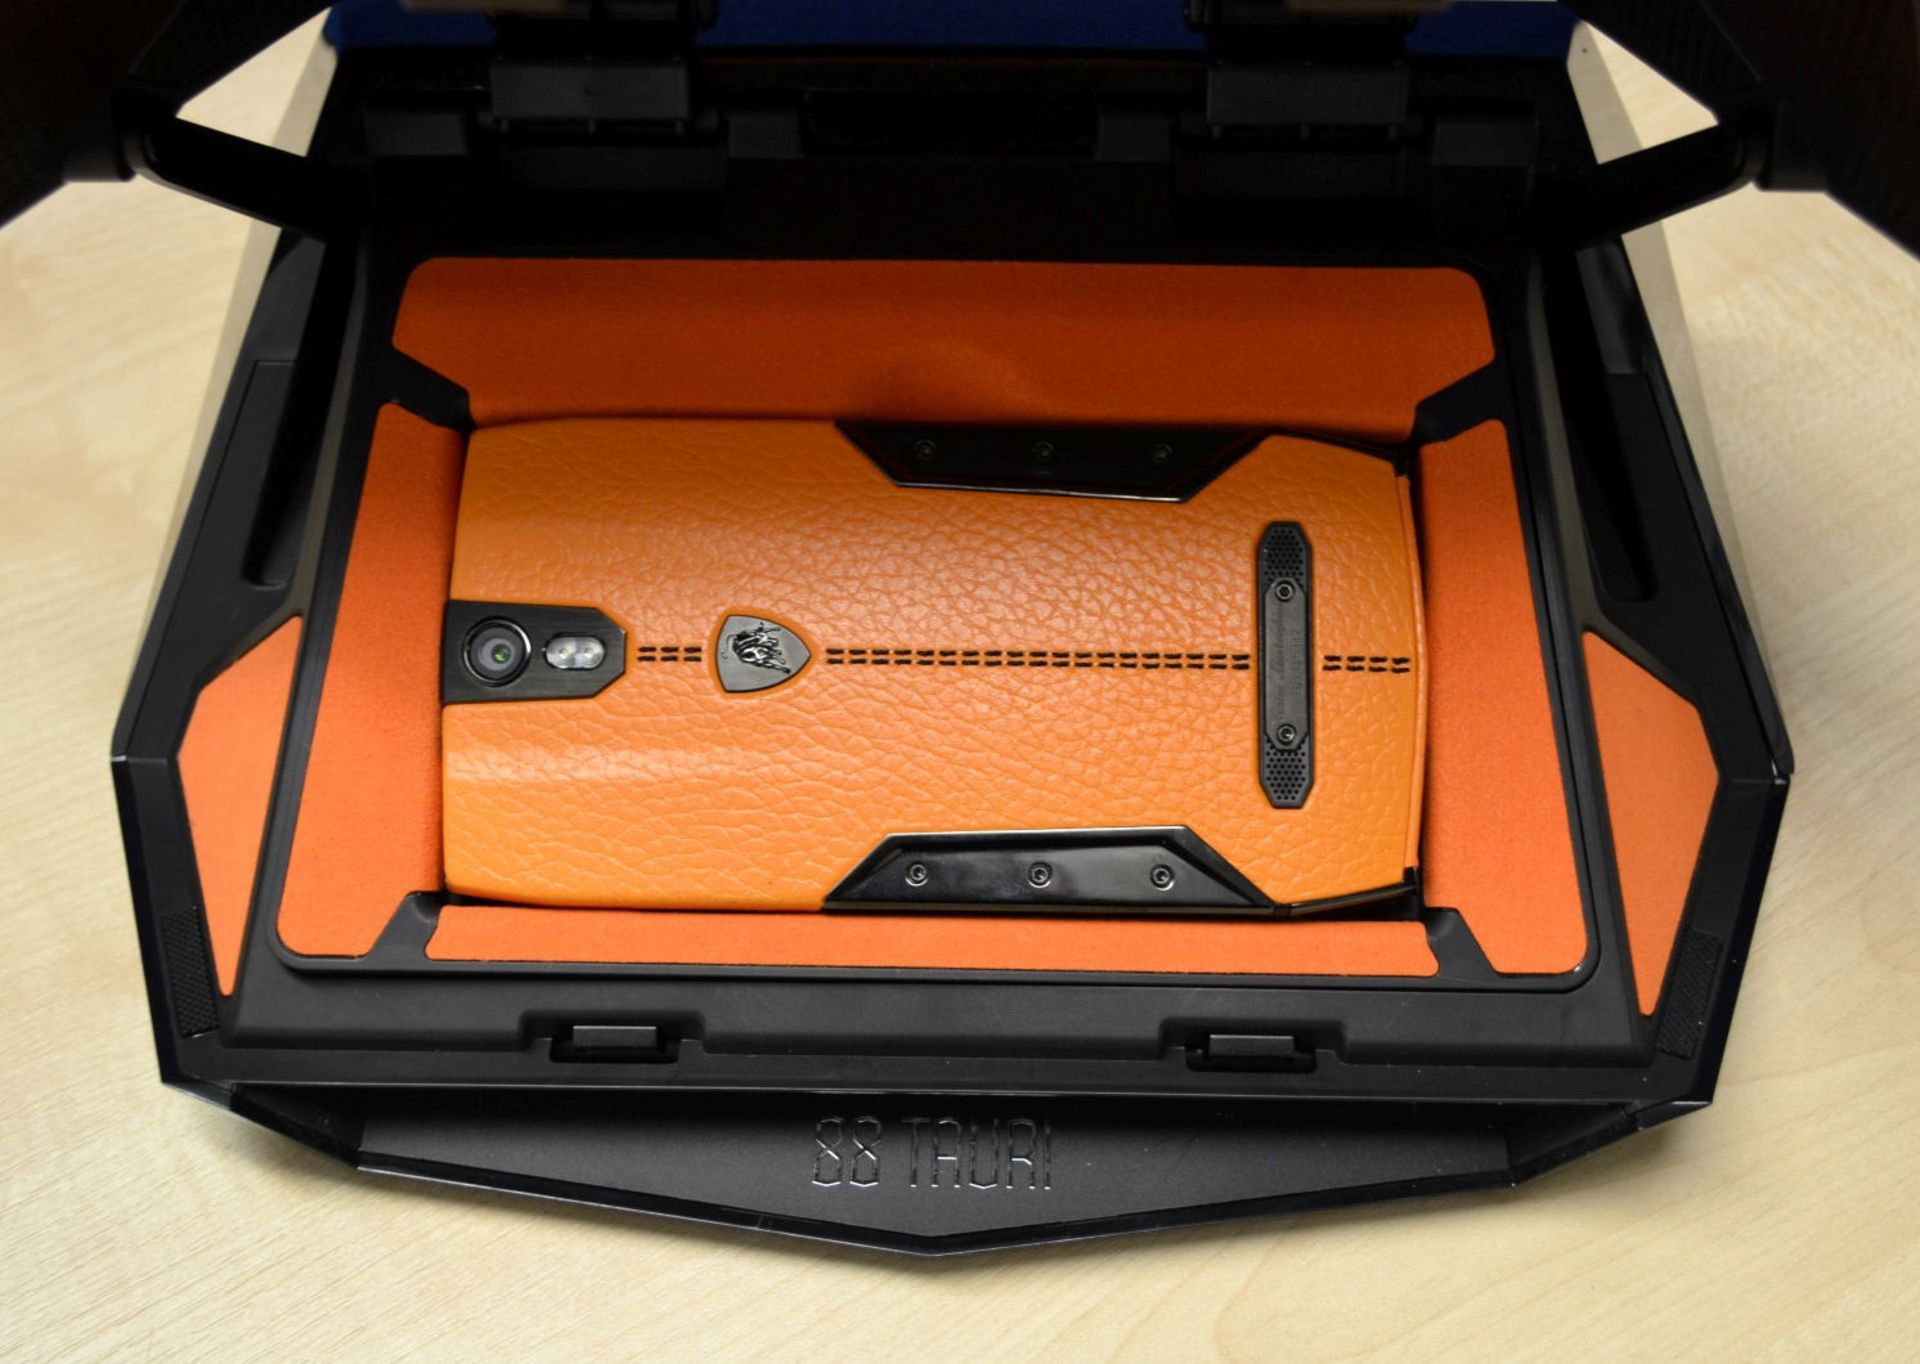 1 x Limited Edition Lamborghini "88 Tauri" Android Smart Phone - Orange - Original RRP £4500 - Image 9 of 27